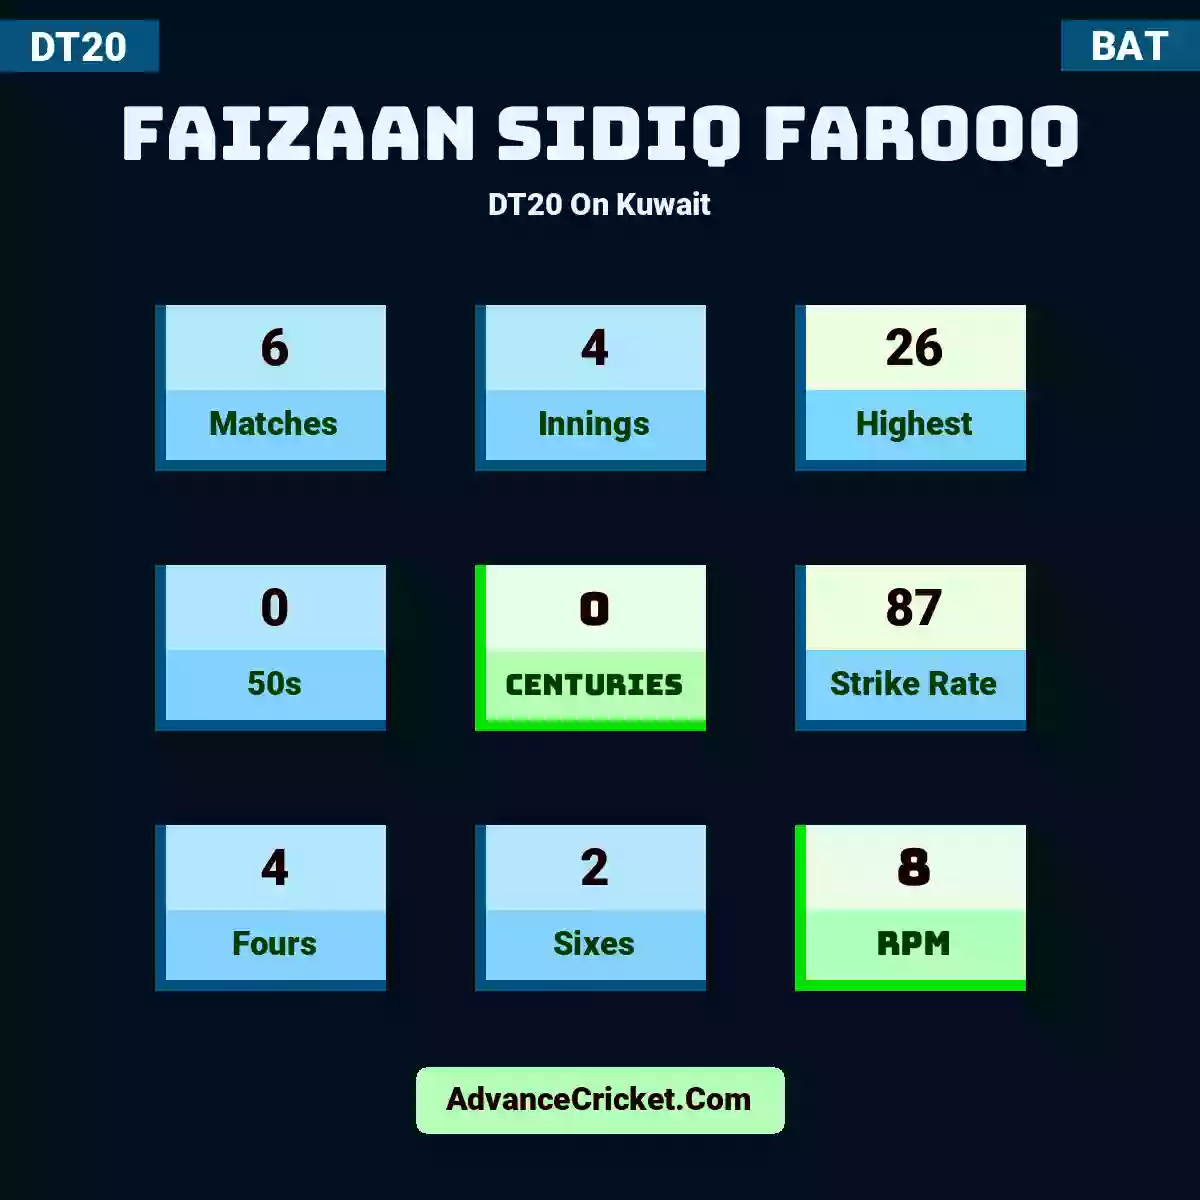 Faizaan Sidiq Farooq DT20  On Kuwait, Faizaan Sidiq Farooq played 6 matches, scored 26 runs as highest, 0 half-centuries, and 0 centuries, with a strike rate of 87. F.Sidiq.Farooq hit 4 fours and 2 sixes, with an RPM of 8.